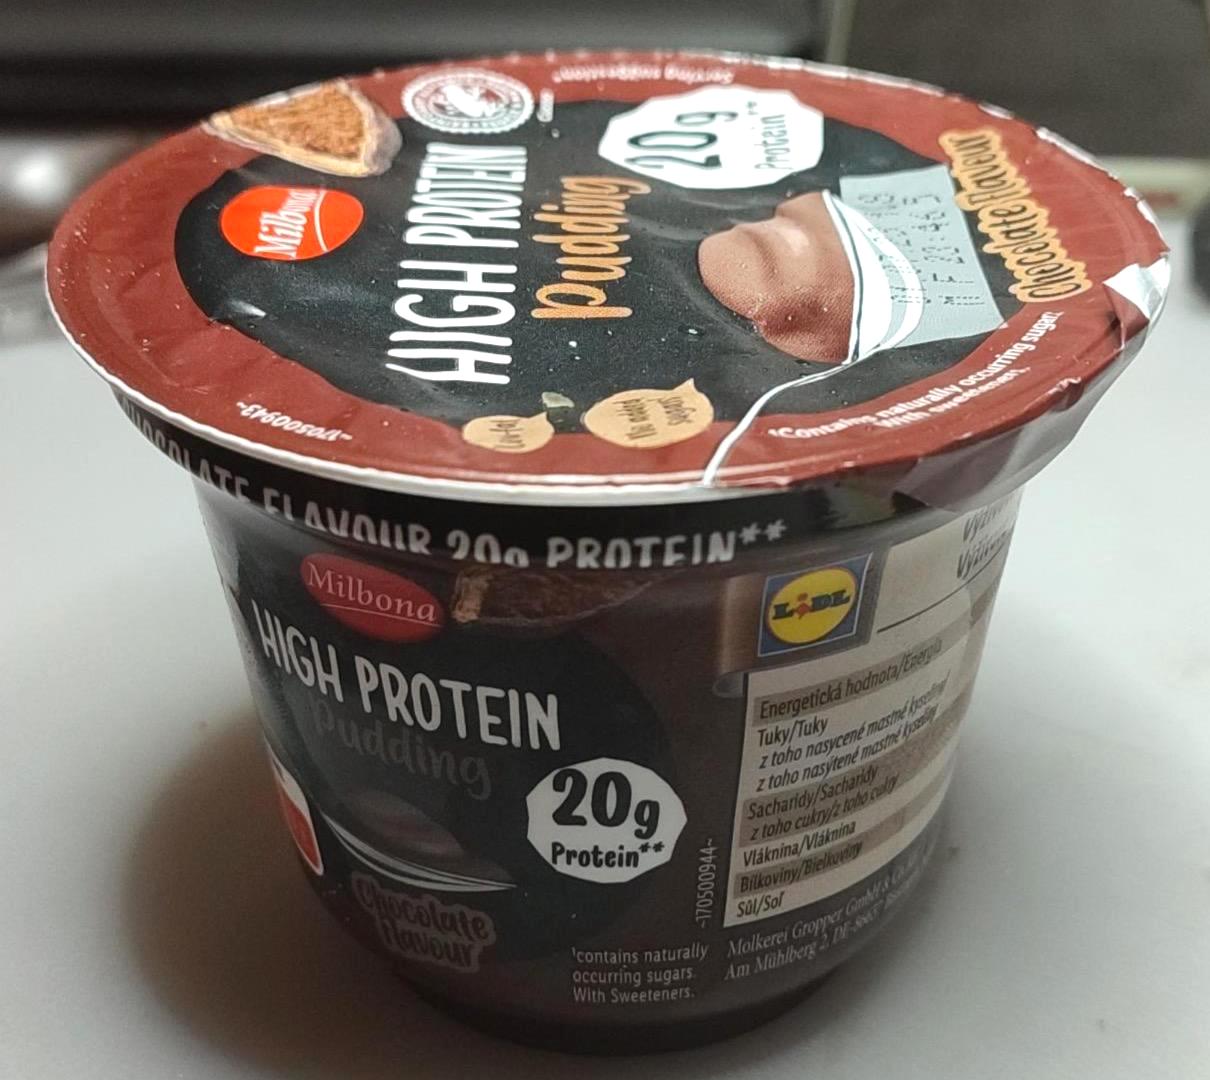 Képek - High protein pudding Chocolate Milbona